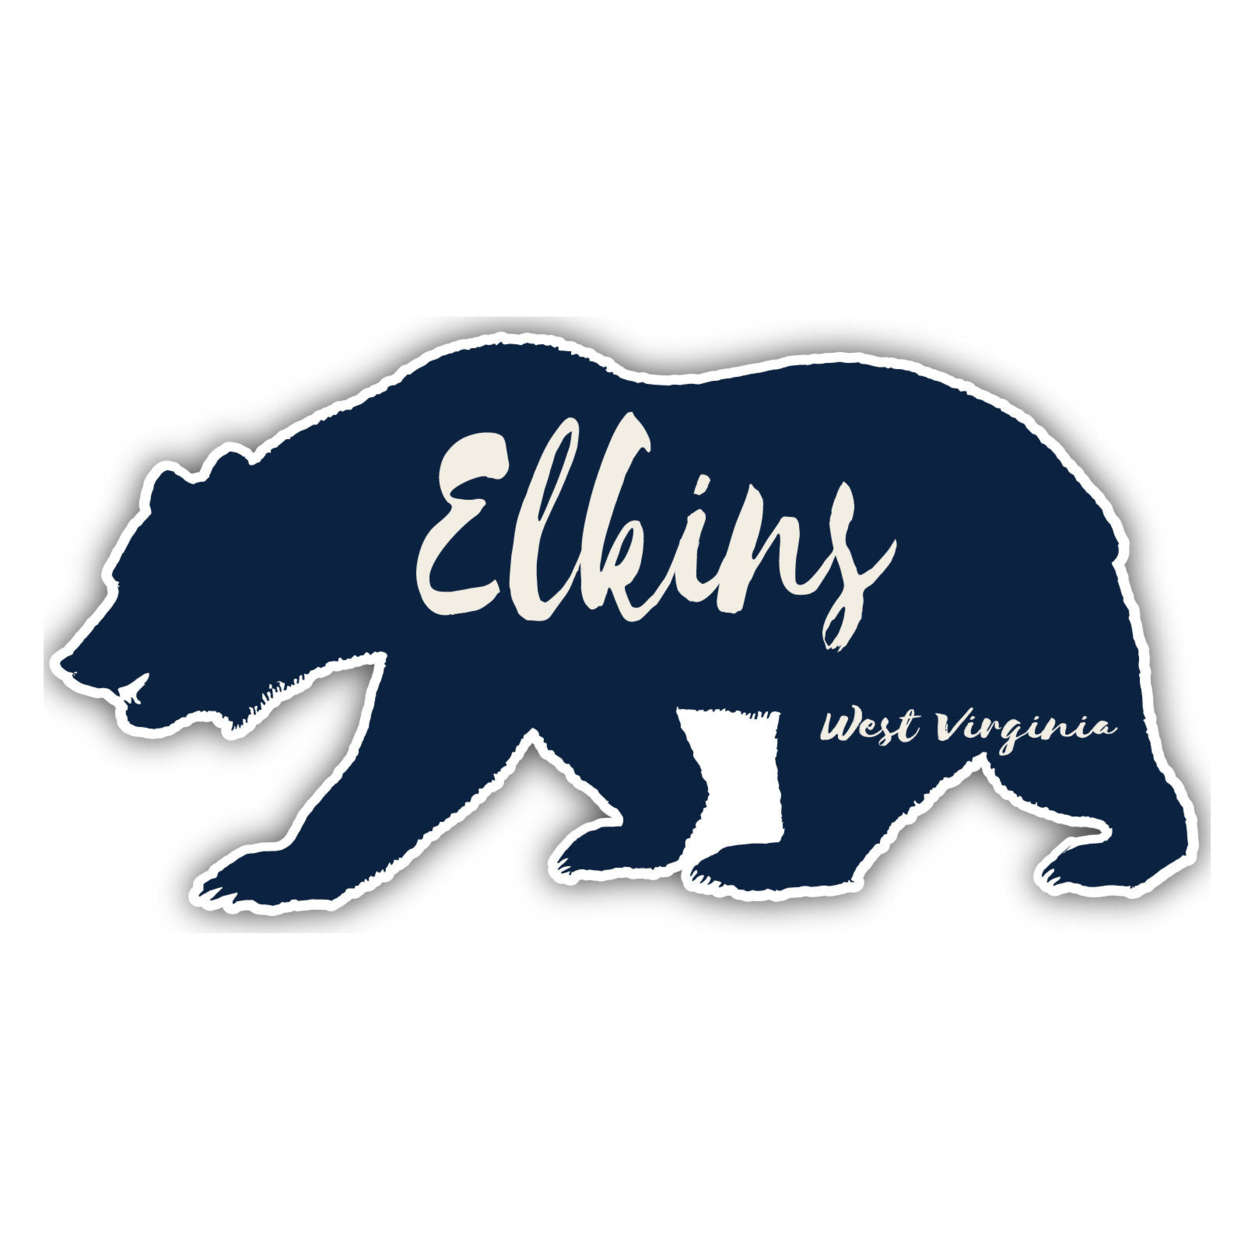 Elkins West Virginia Souvenir Decorative Stickers (Choose Theme And Size) - 4-Pack, 10-Inch, Tent